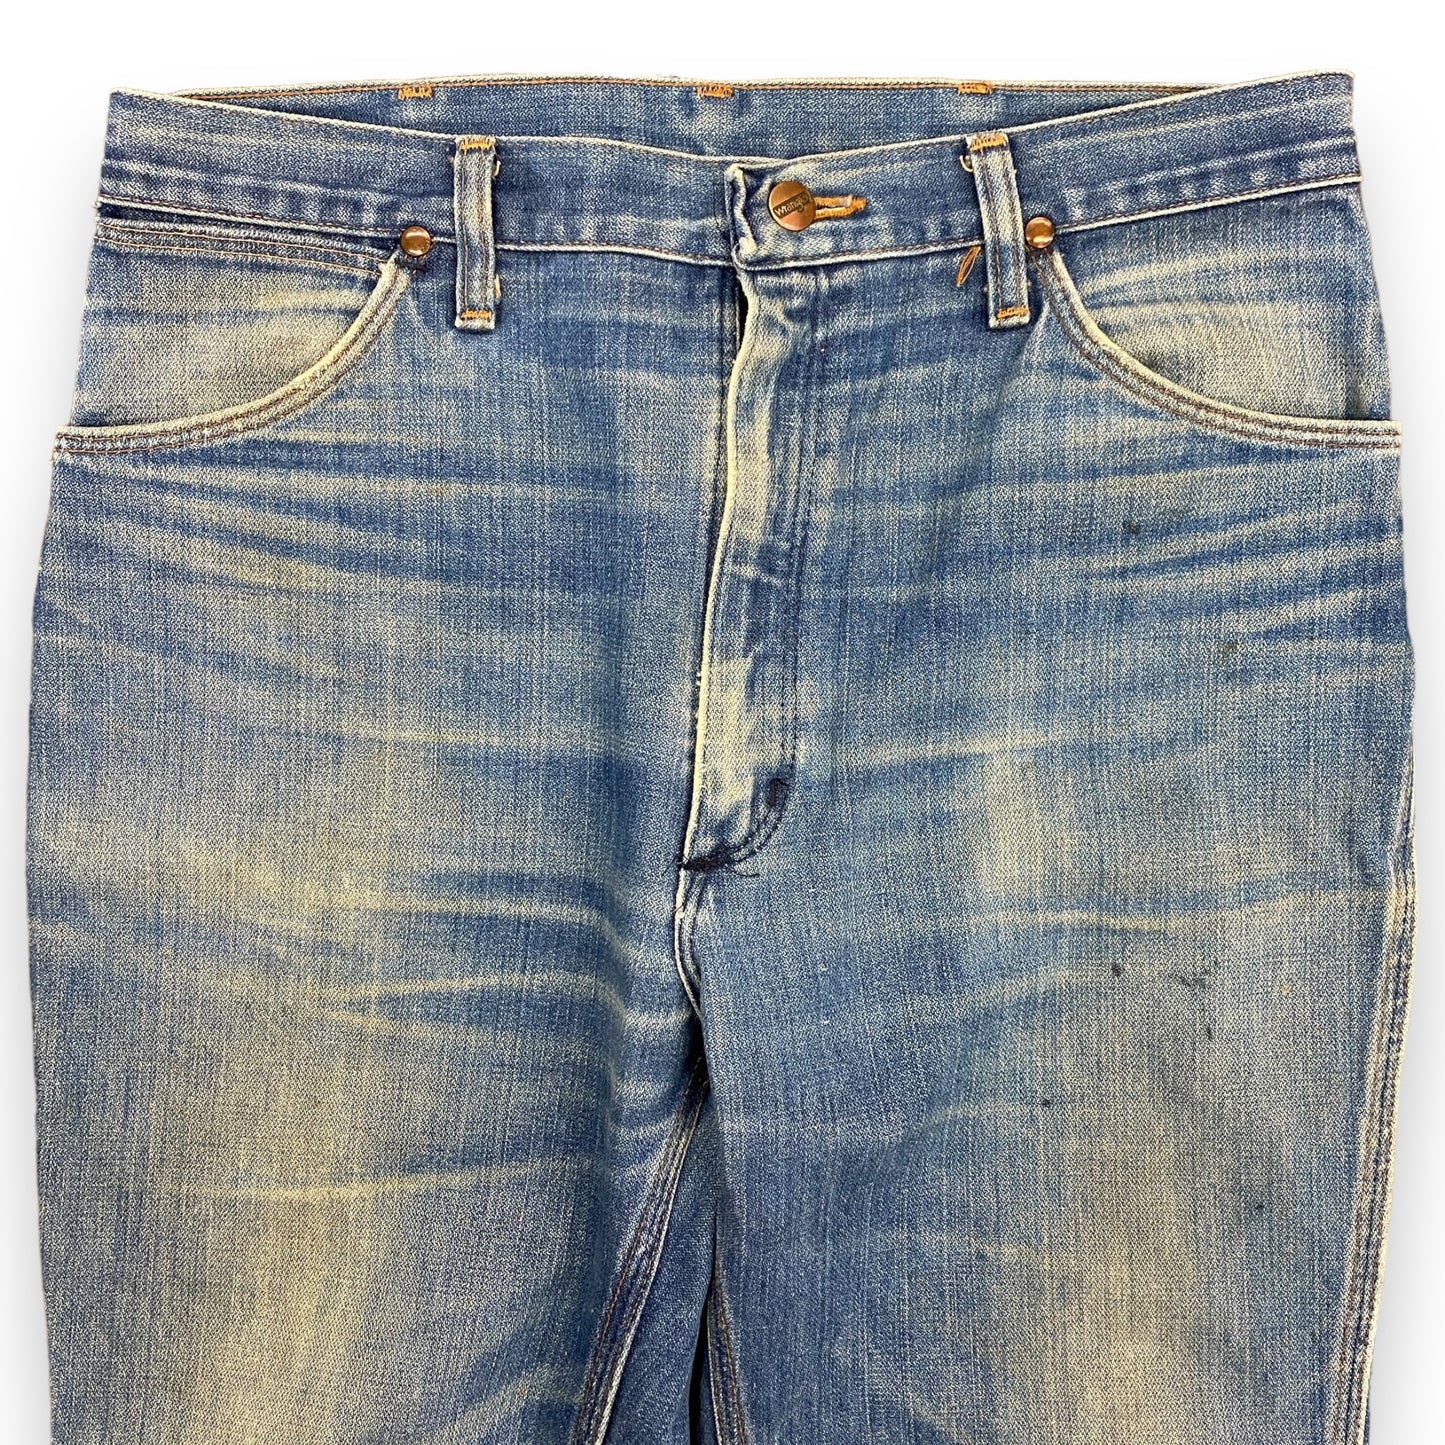 Vintage 1970s Wrangler Medium Wash Jeans - 32"x32"